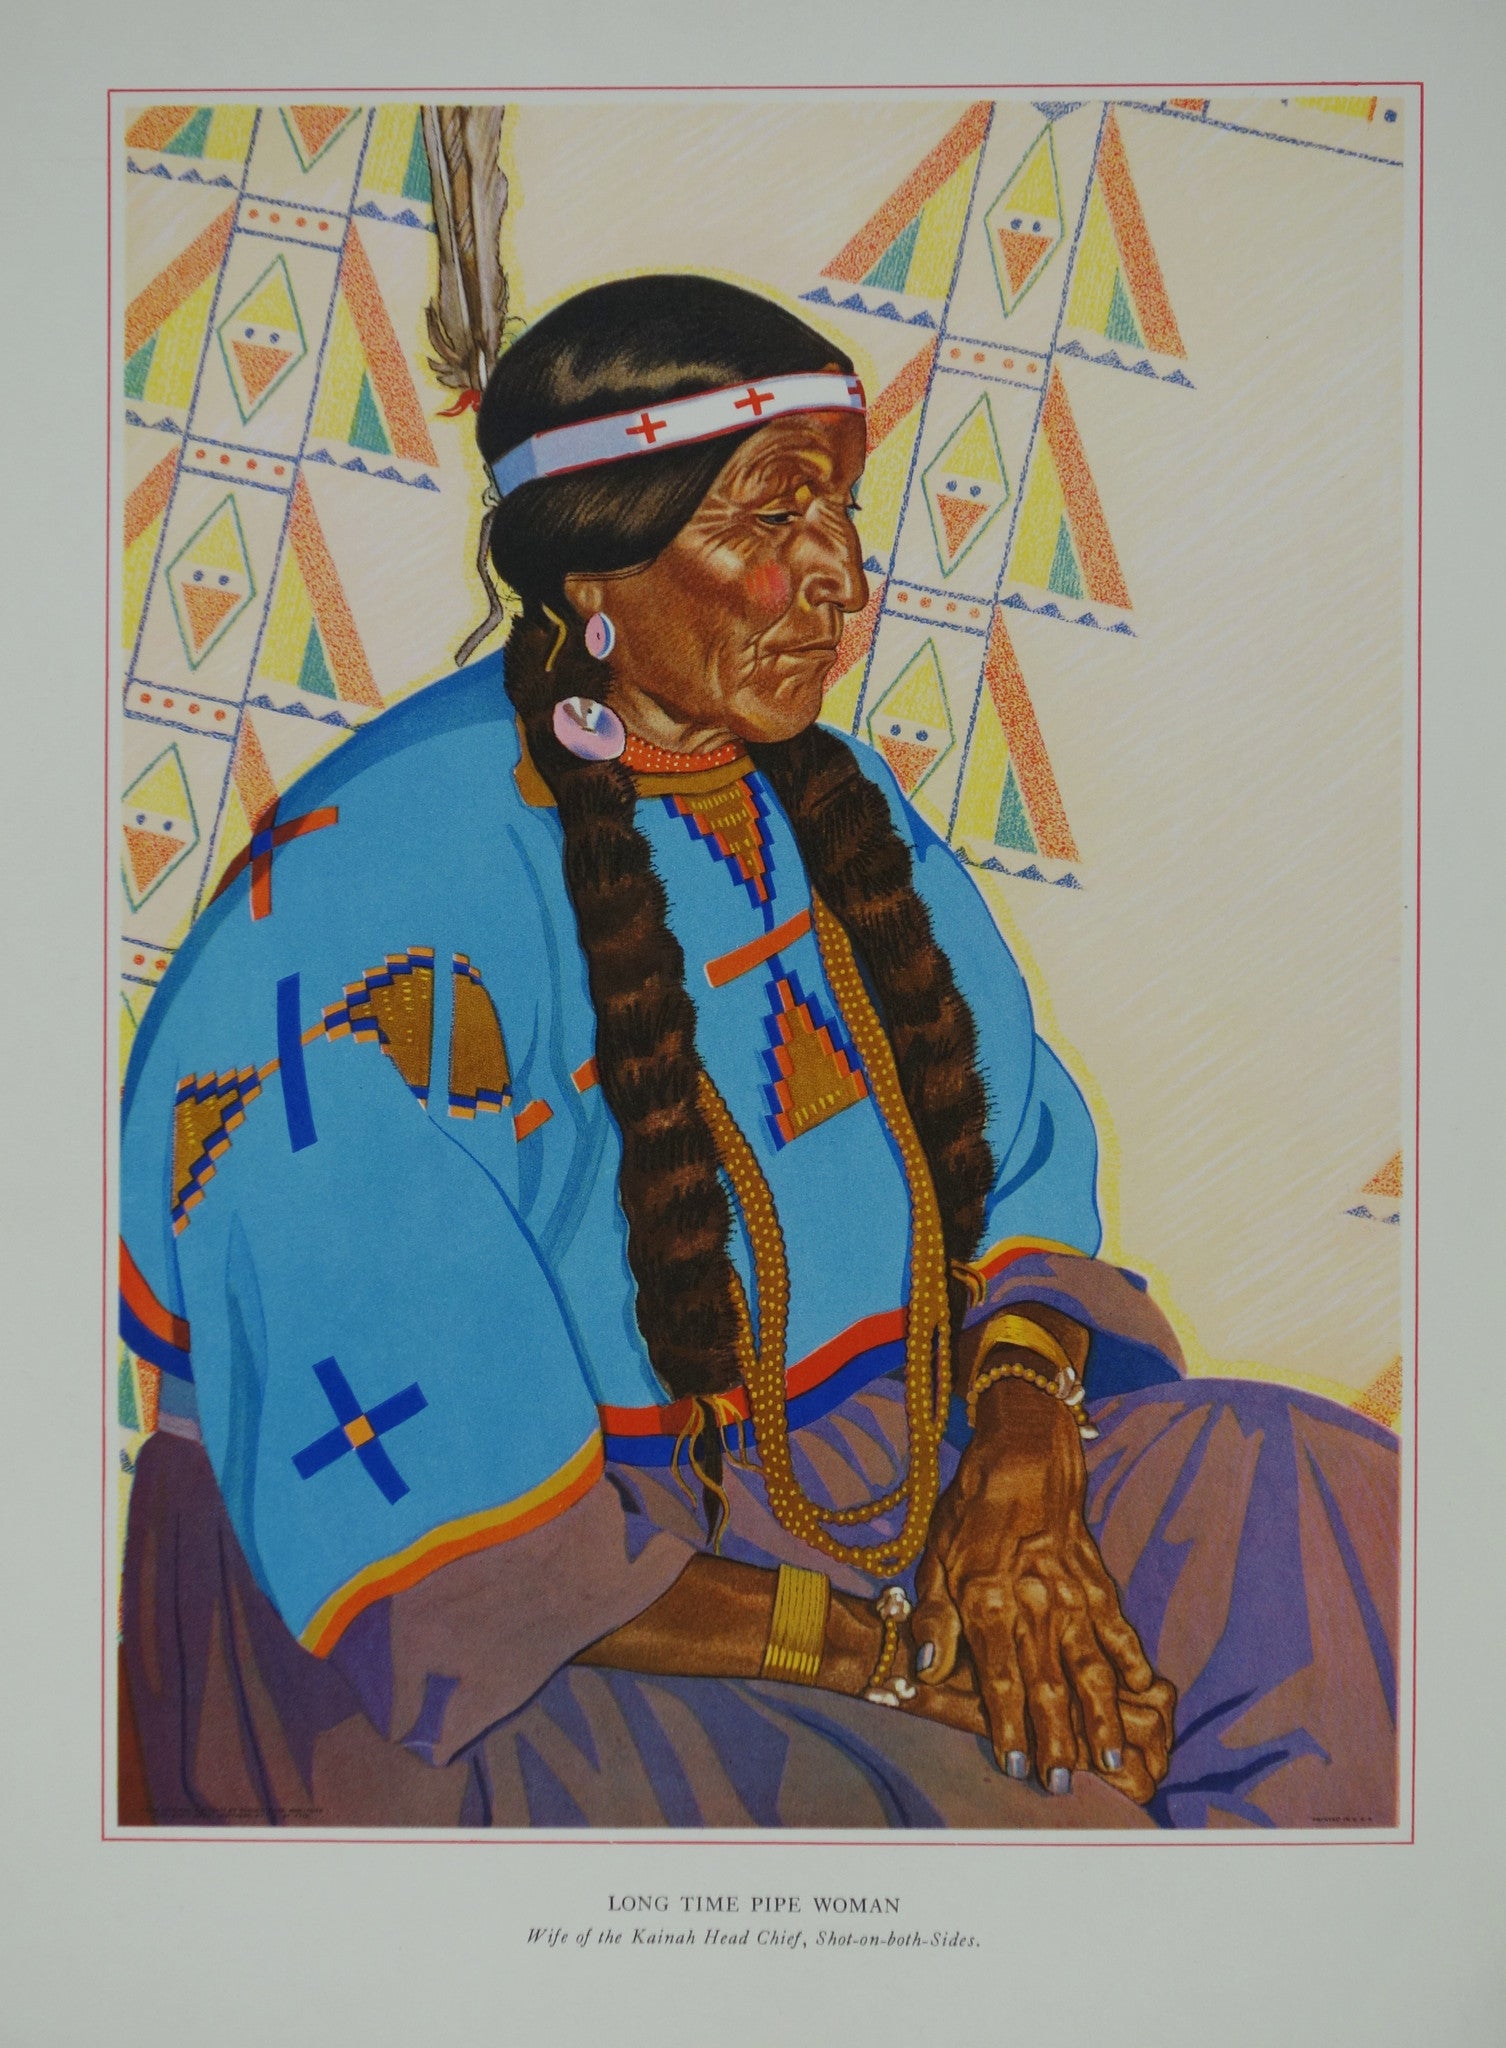 Portrait of Blackfeet Indian - Long Time Pipe Woman